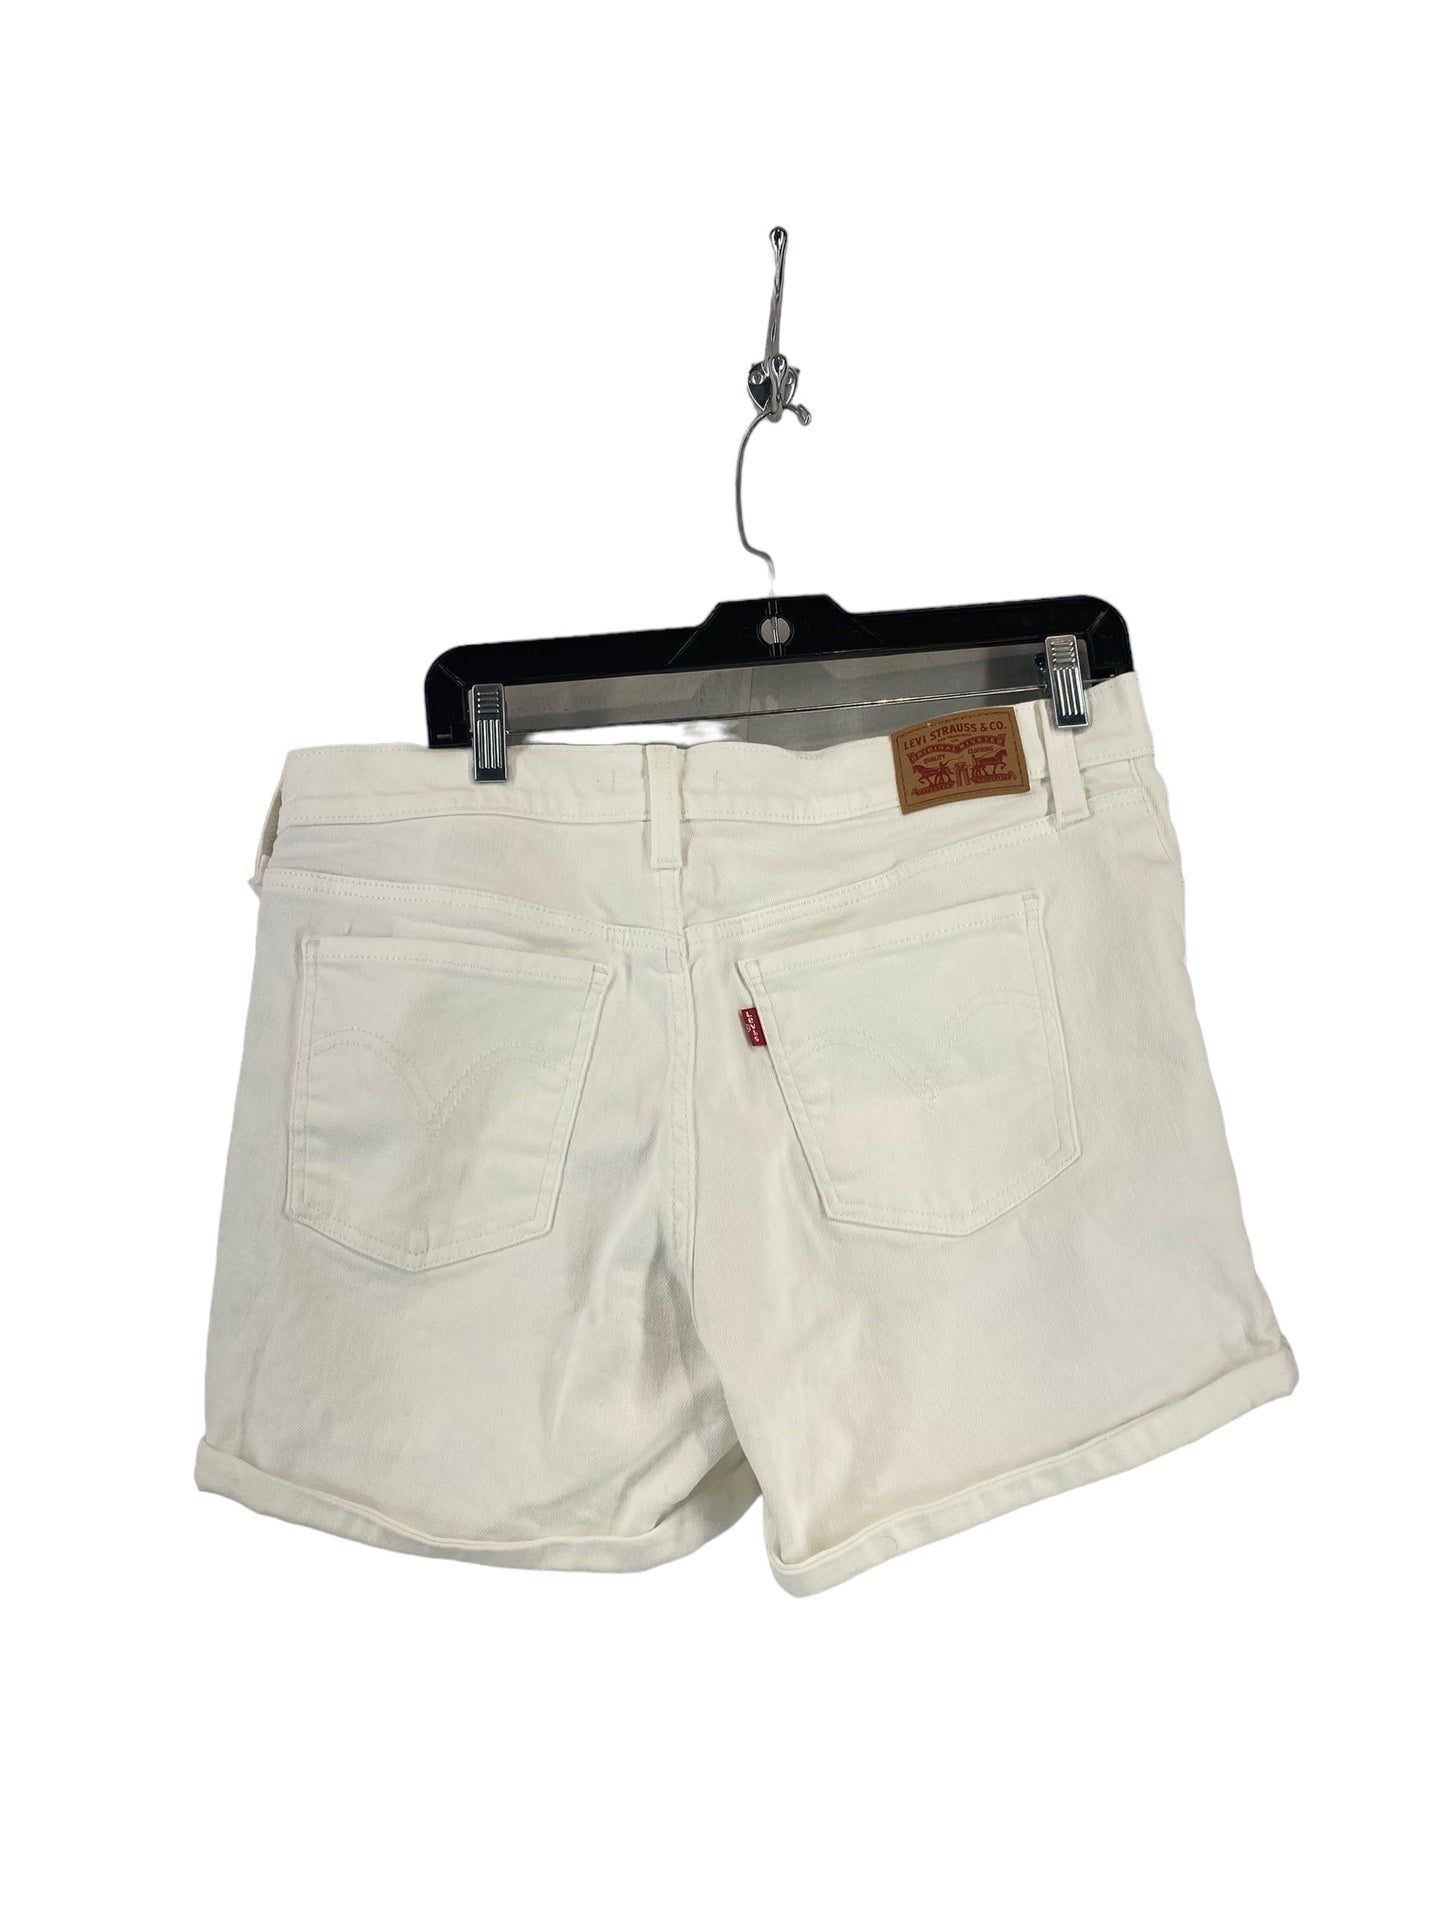 White Denim Shorts Levis, Size 32